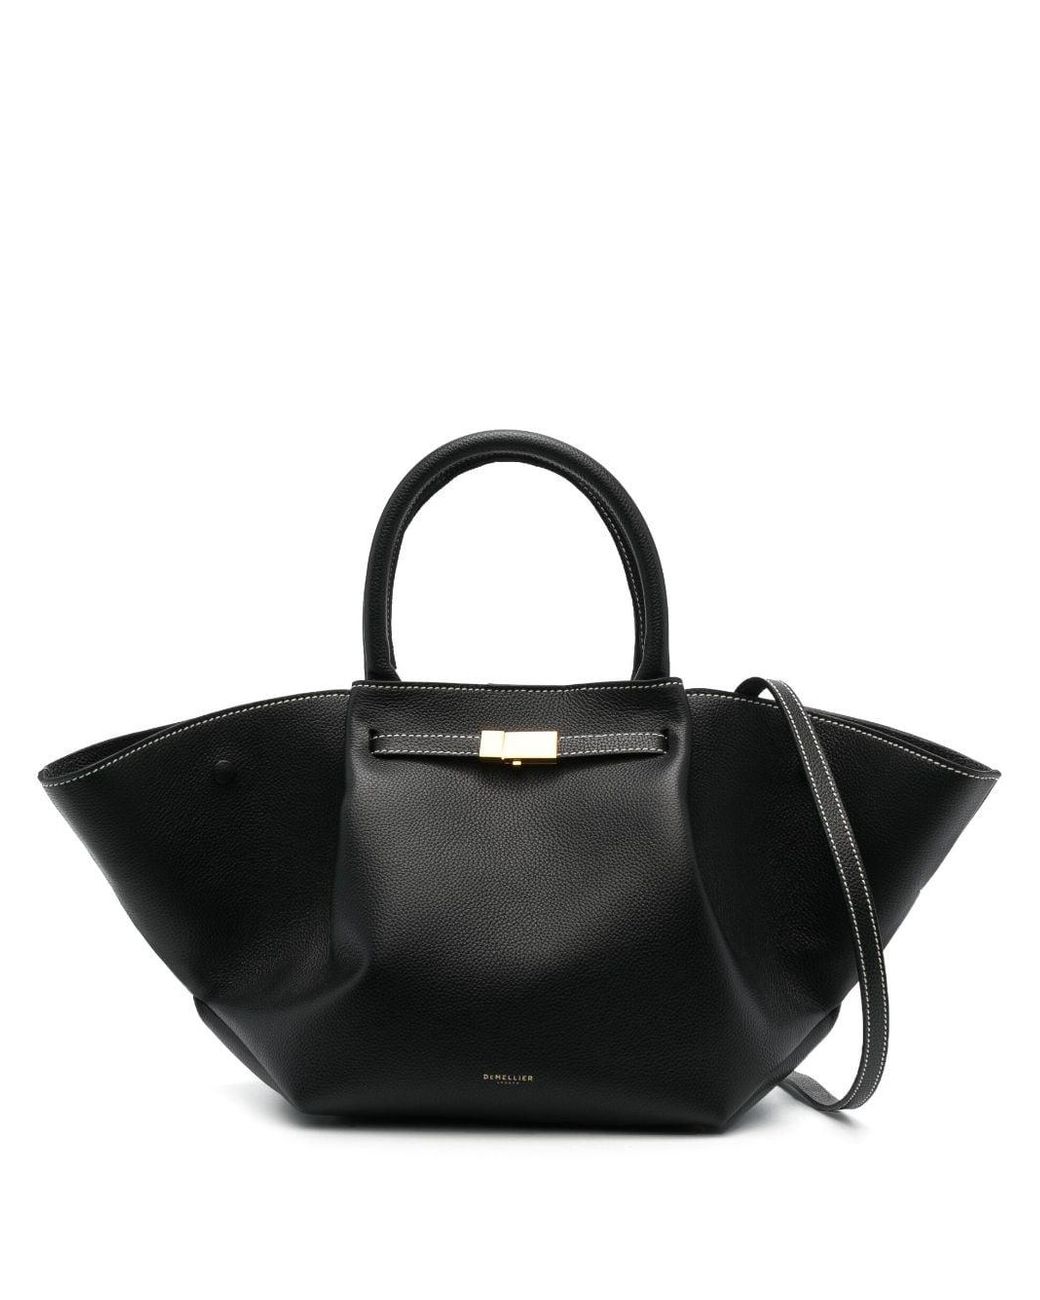 DeMellier The Midi New York Bag in Black | Lyst